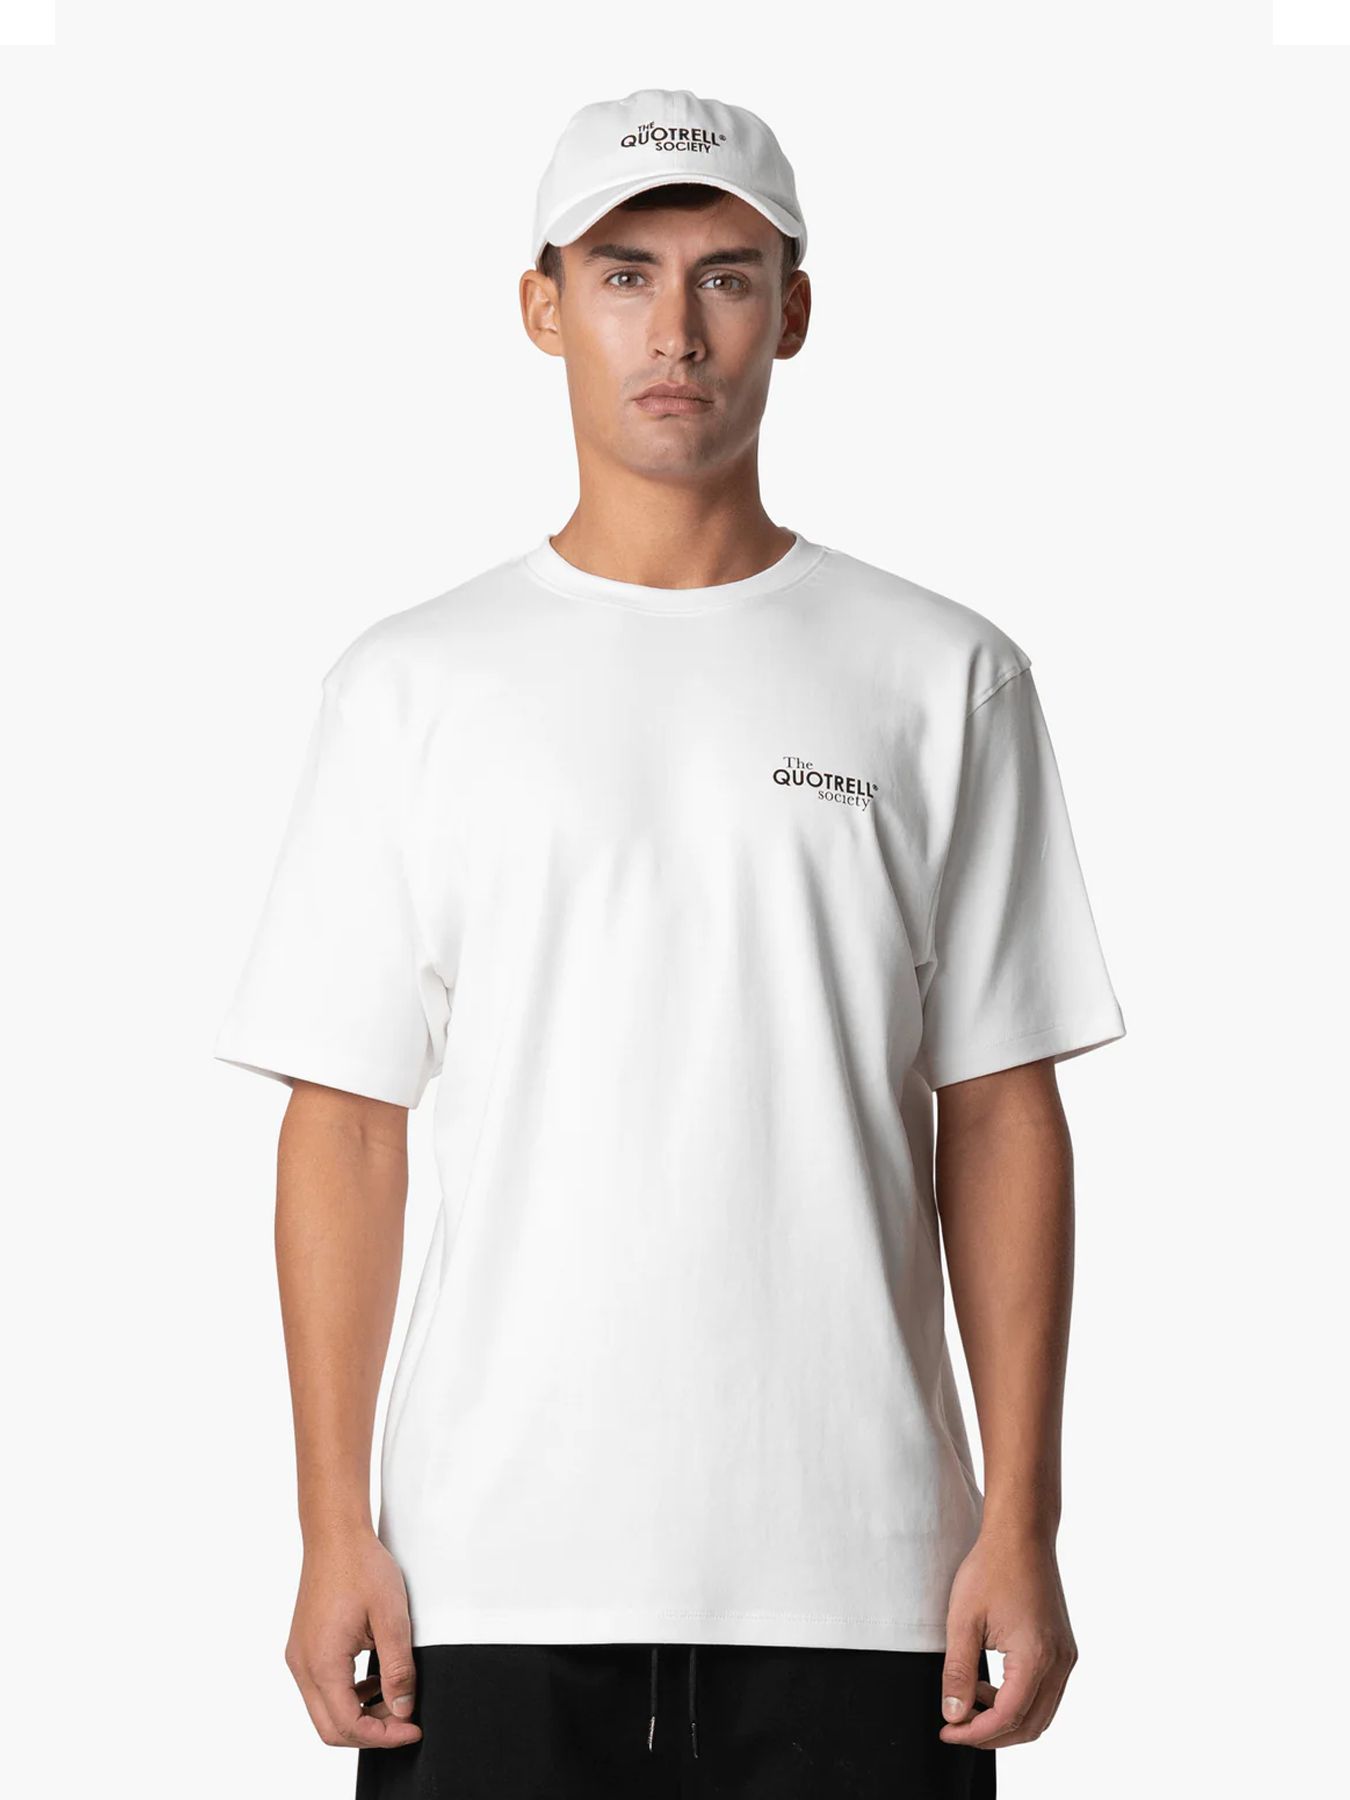 Quotrell Society t-shirt White/black 2900147485068